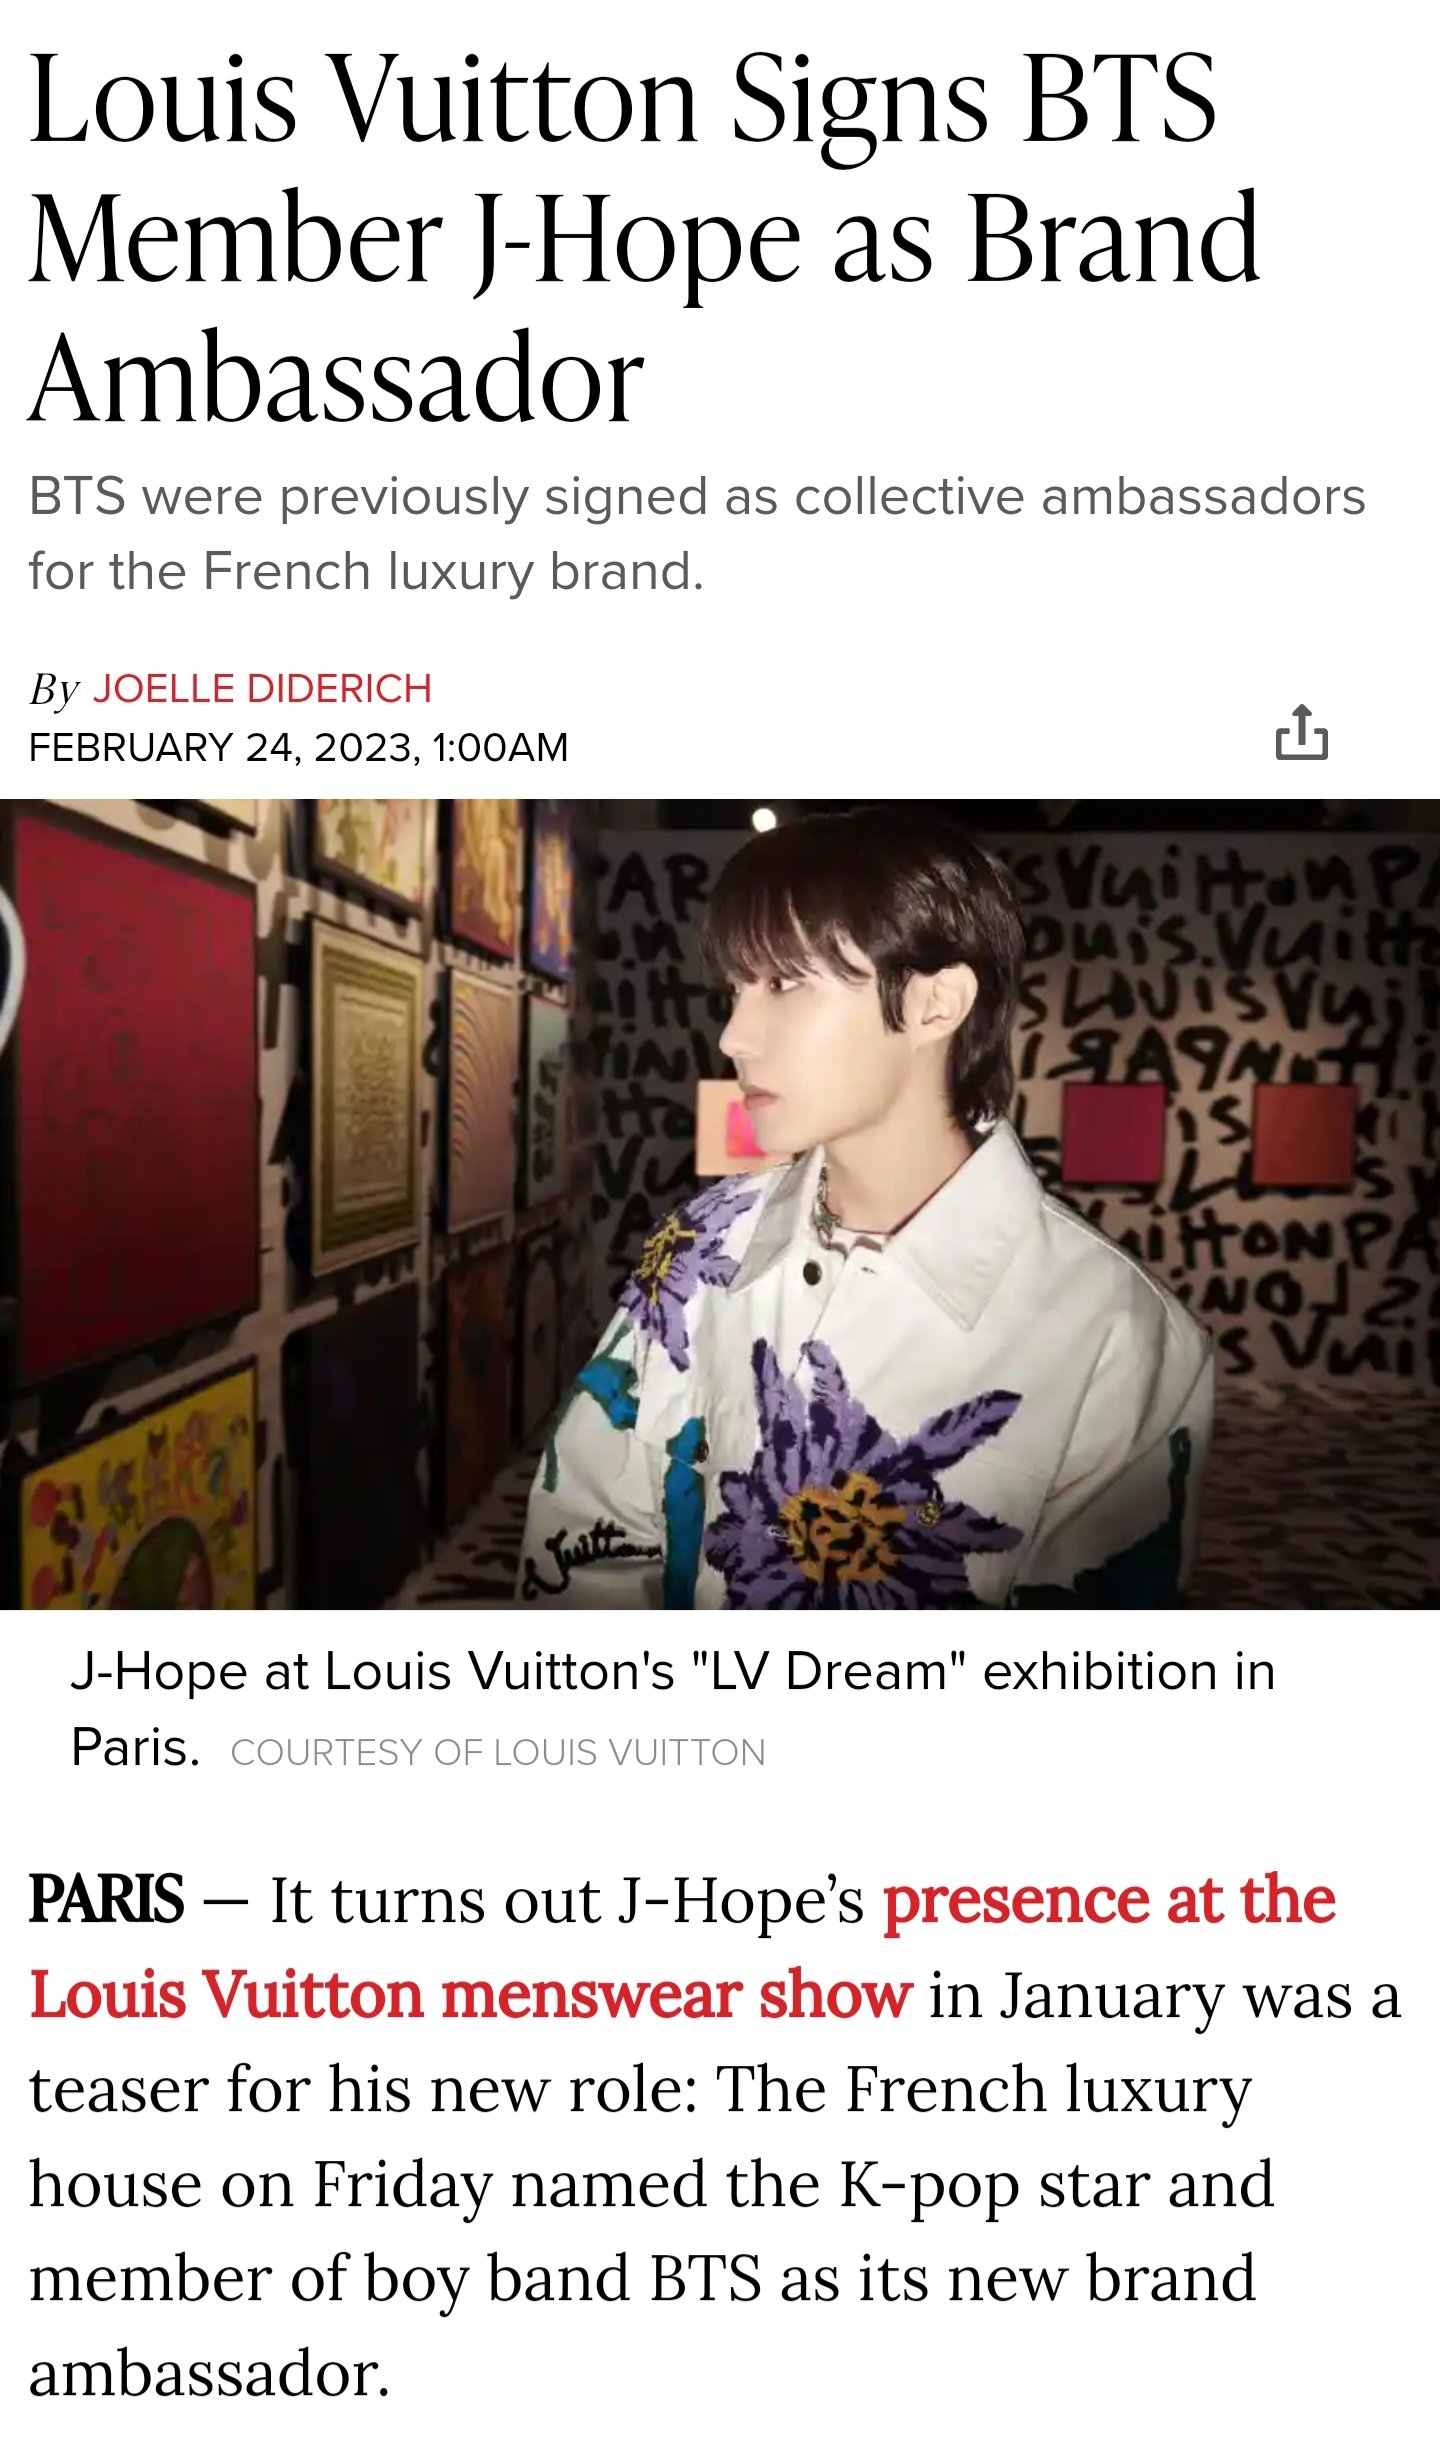 J-hope becomes Louis Vuitton's brand ambassador as fans hail